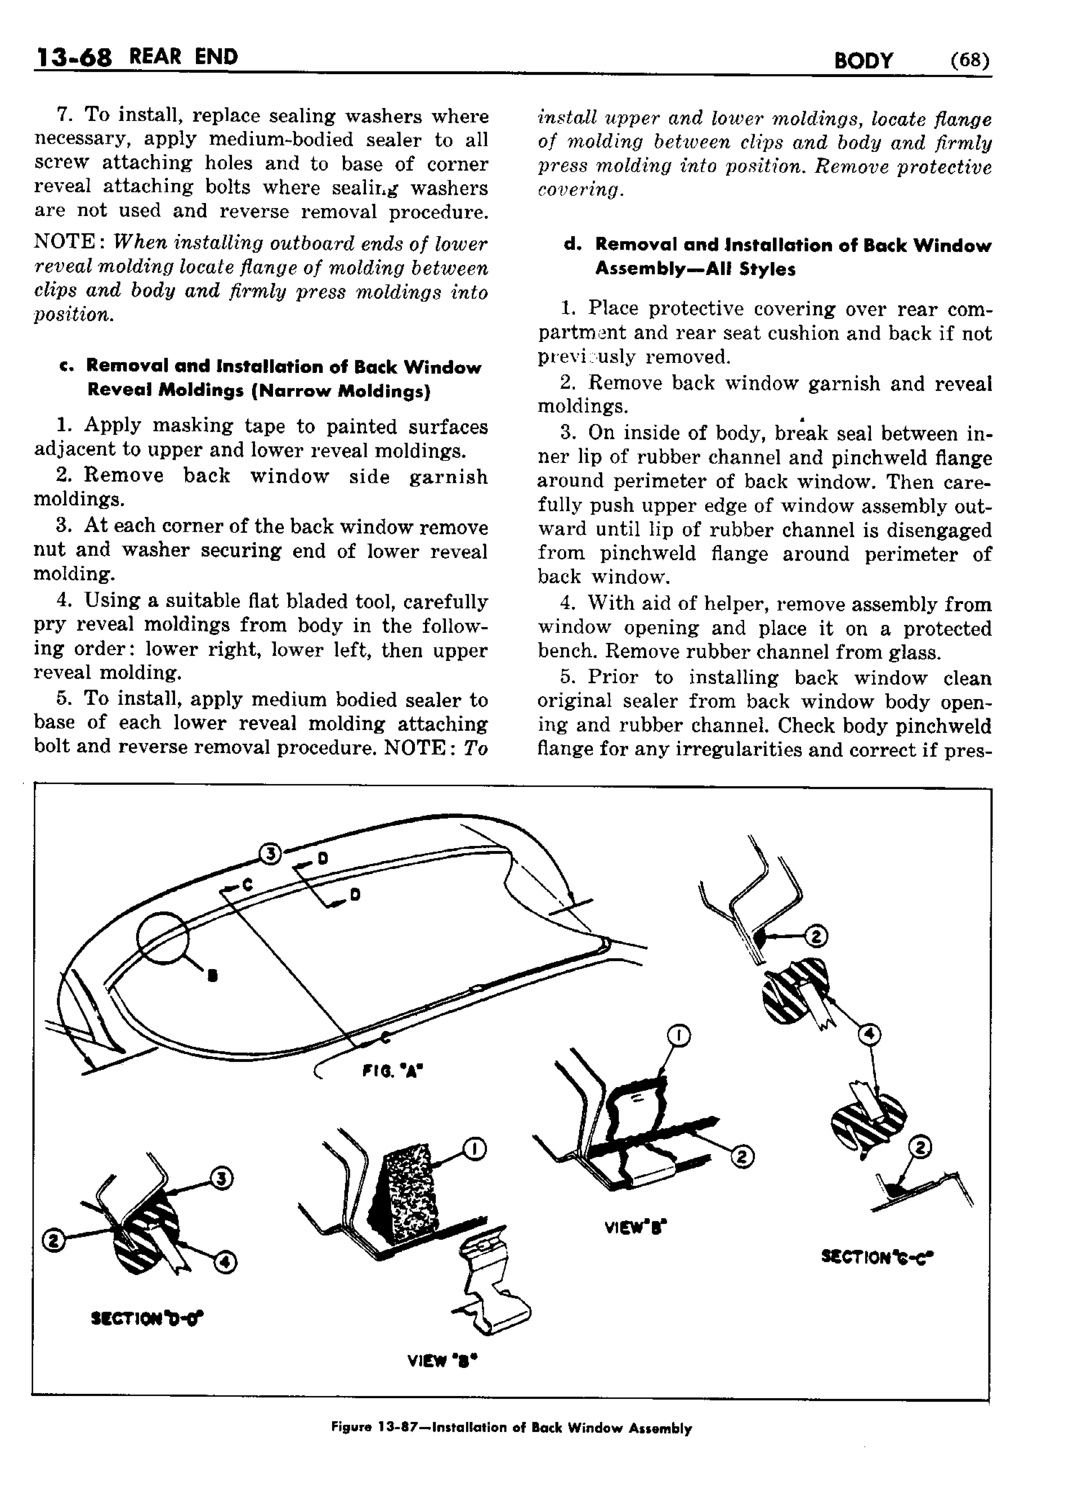 n_1958 Buick Body Service Manual-069-069.jpg